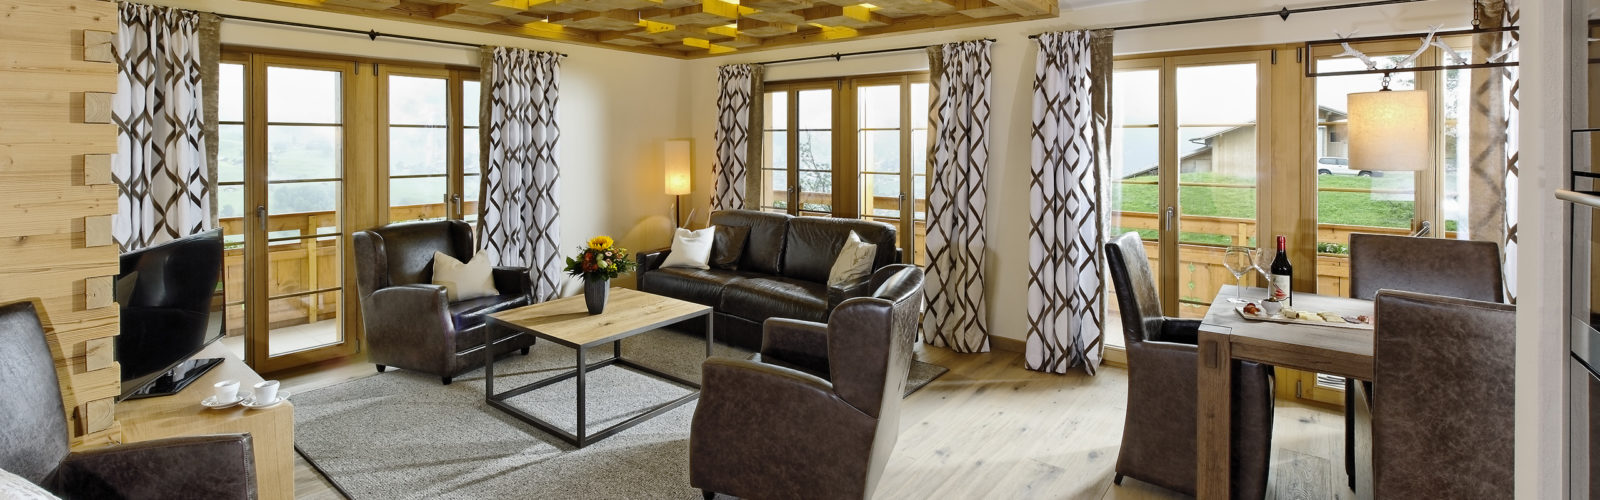 hotel-aspen-suite-living-room